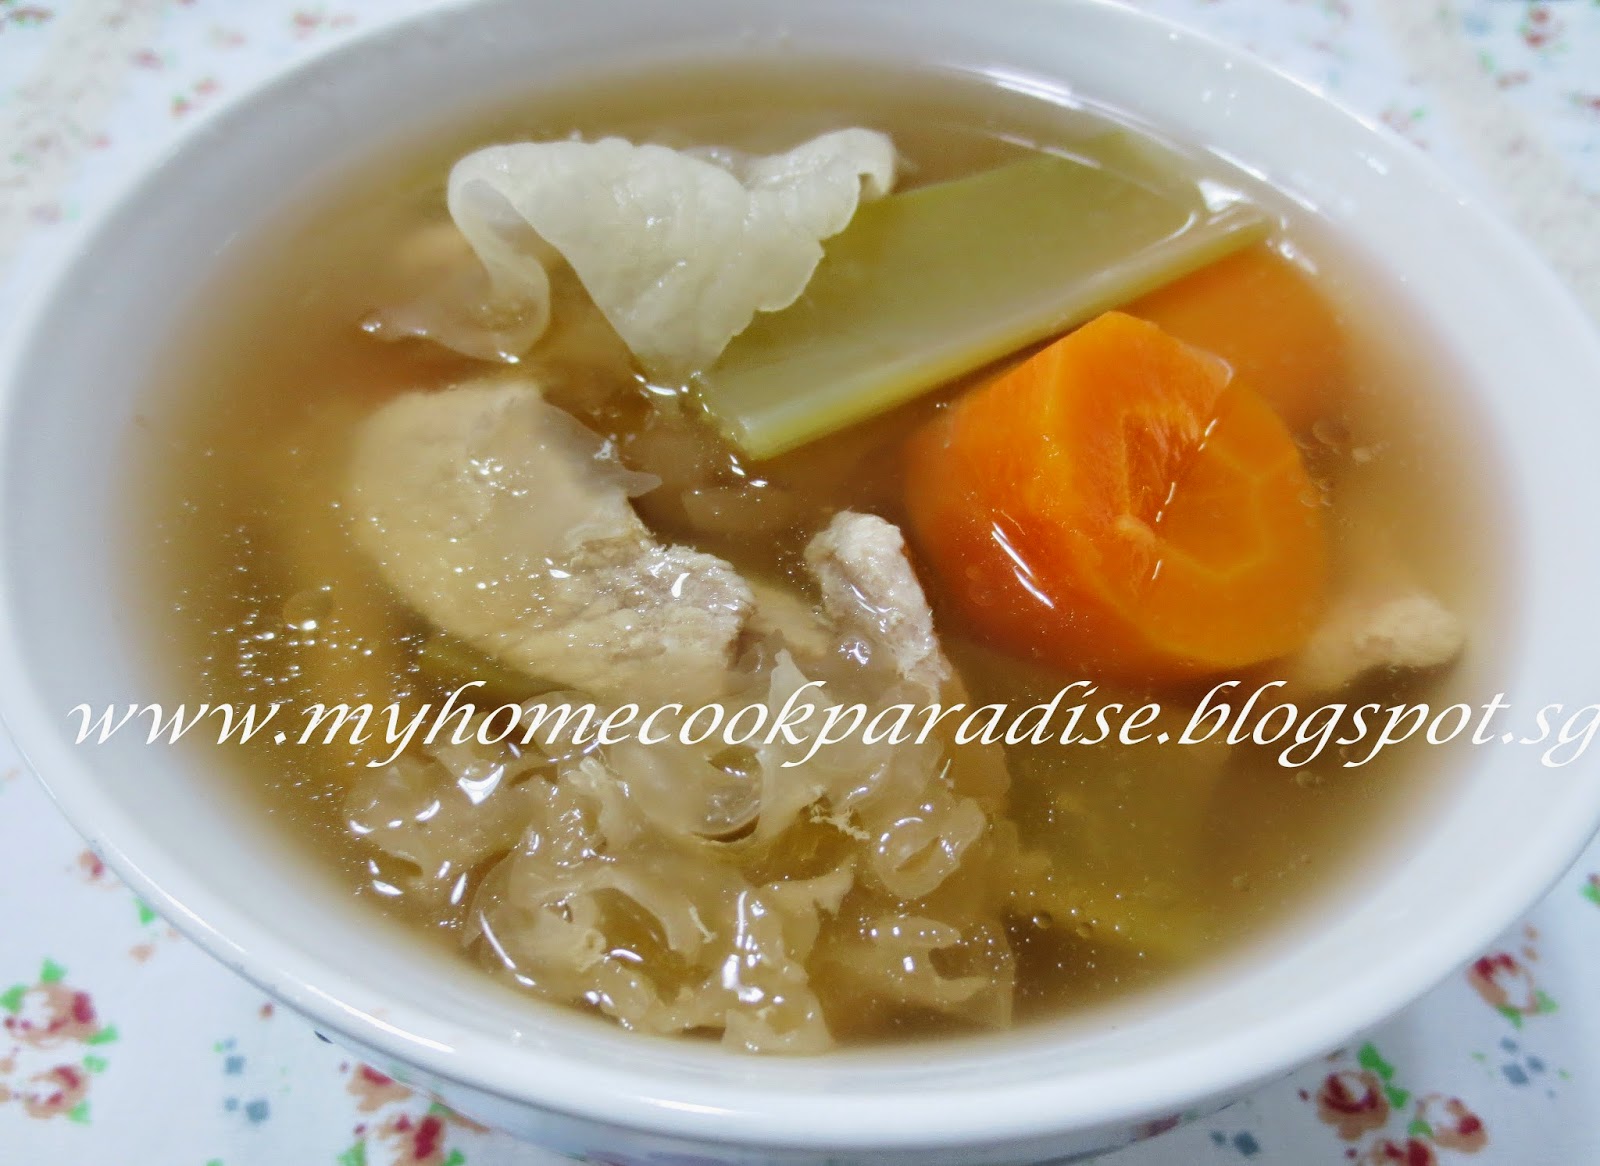 http://myhomecookparadise.blogspot.sg/2014/06/white-fungus-celery-carrot-soup.html